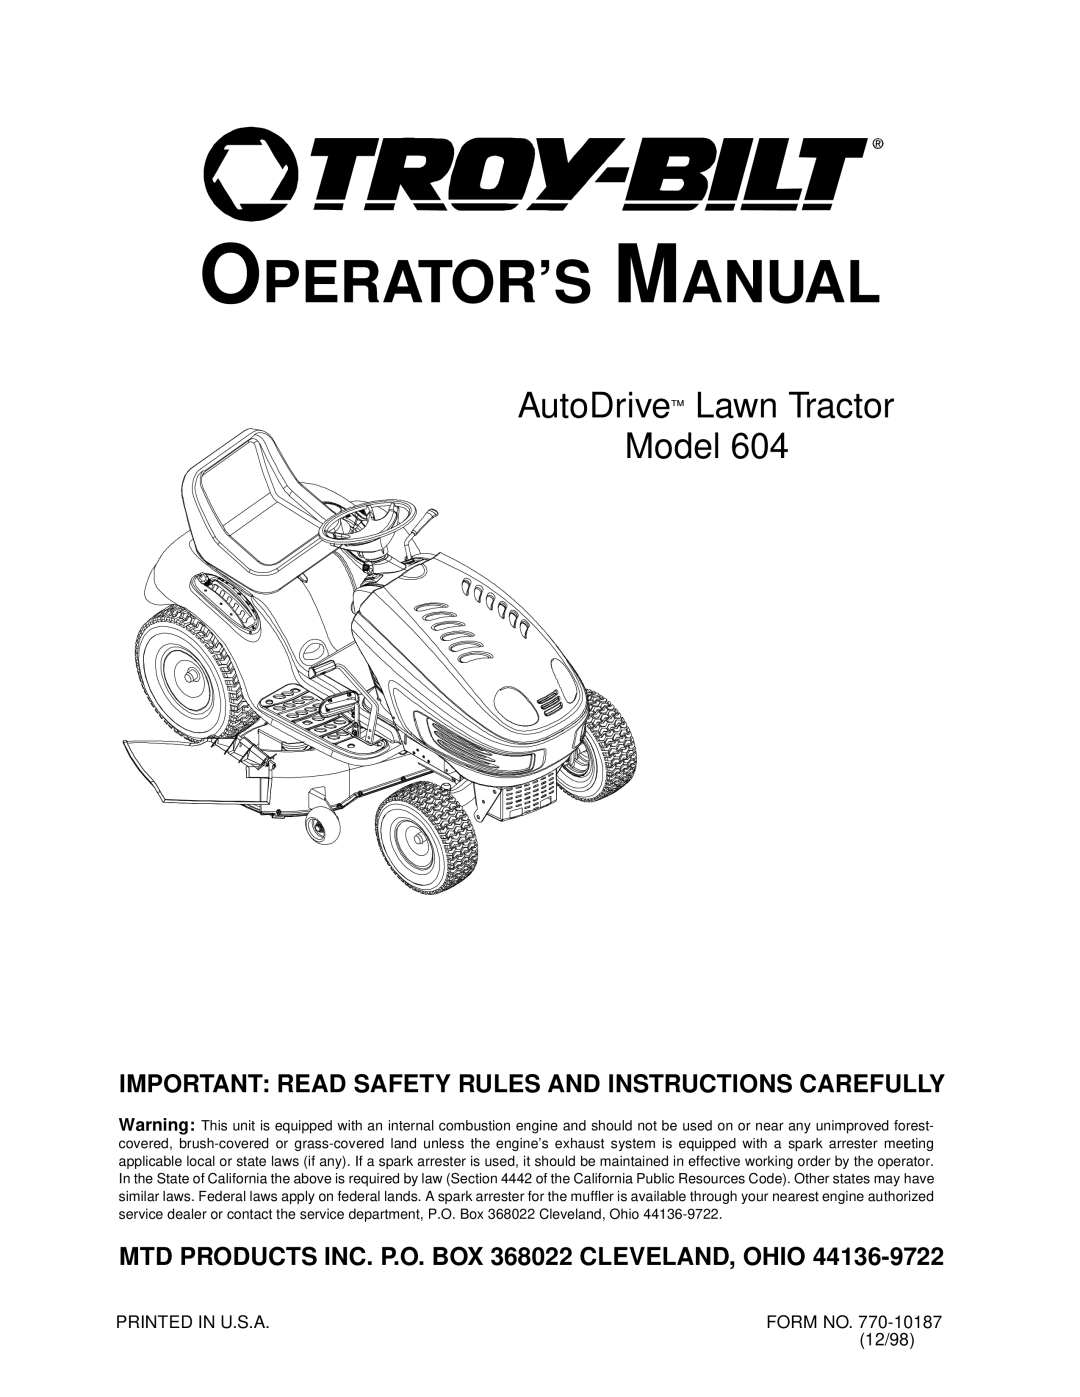 Troy-Bilt 604 manual MTD PRODUCTS INC. P.O. BOX 368022 CLEVELAND, OHIO, Operator’S Manual, AutoDrive Lawn Tractor Model 